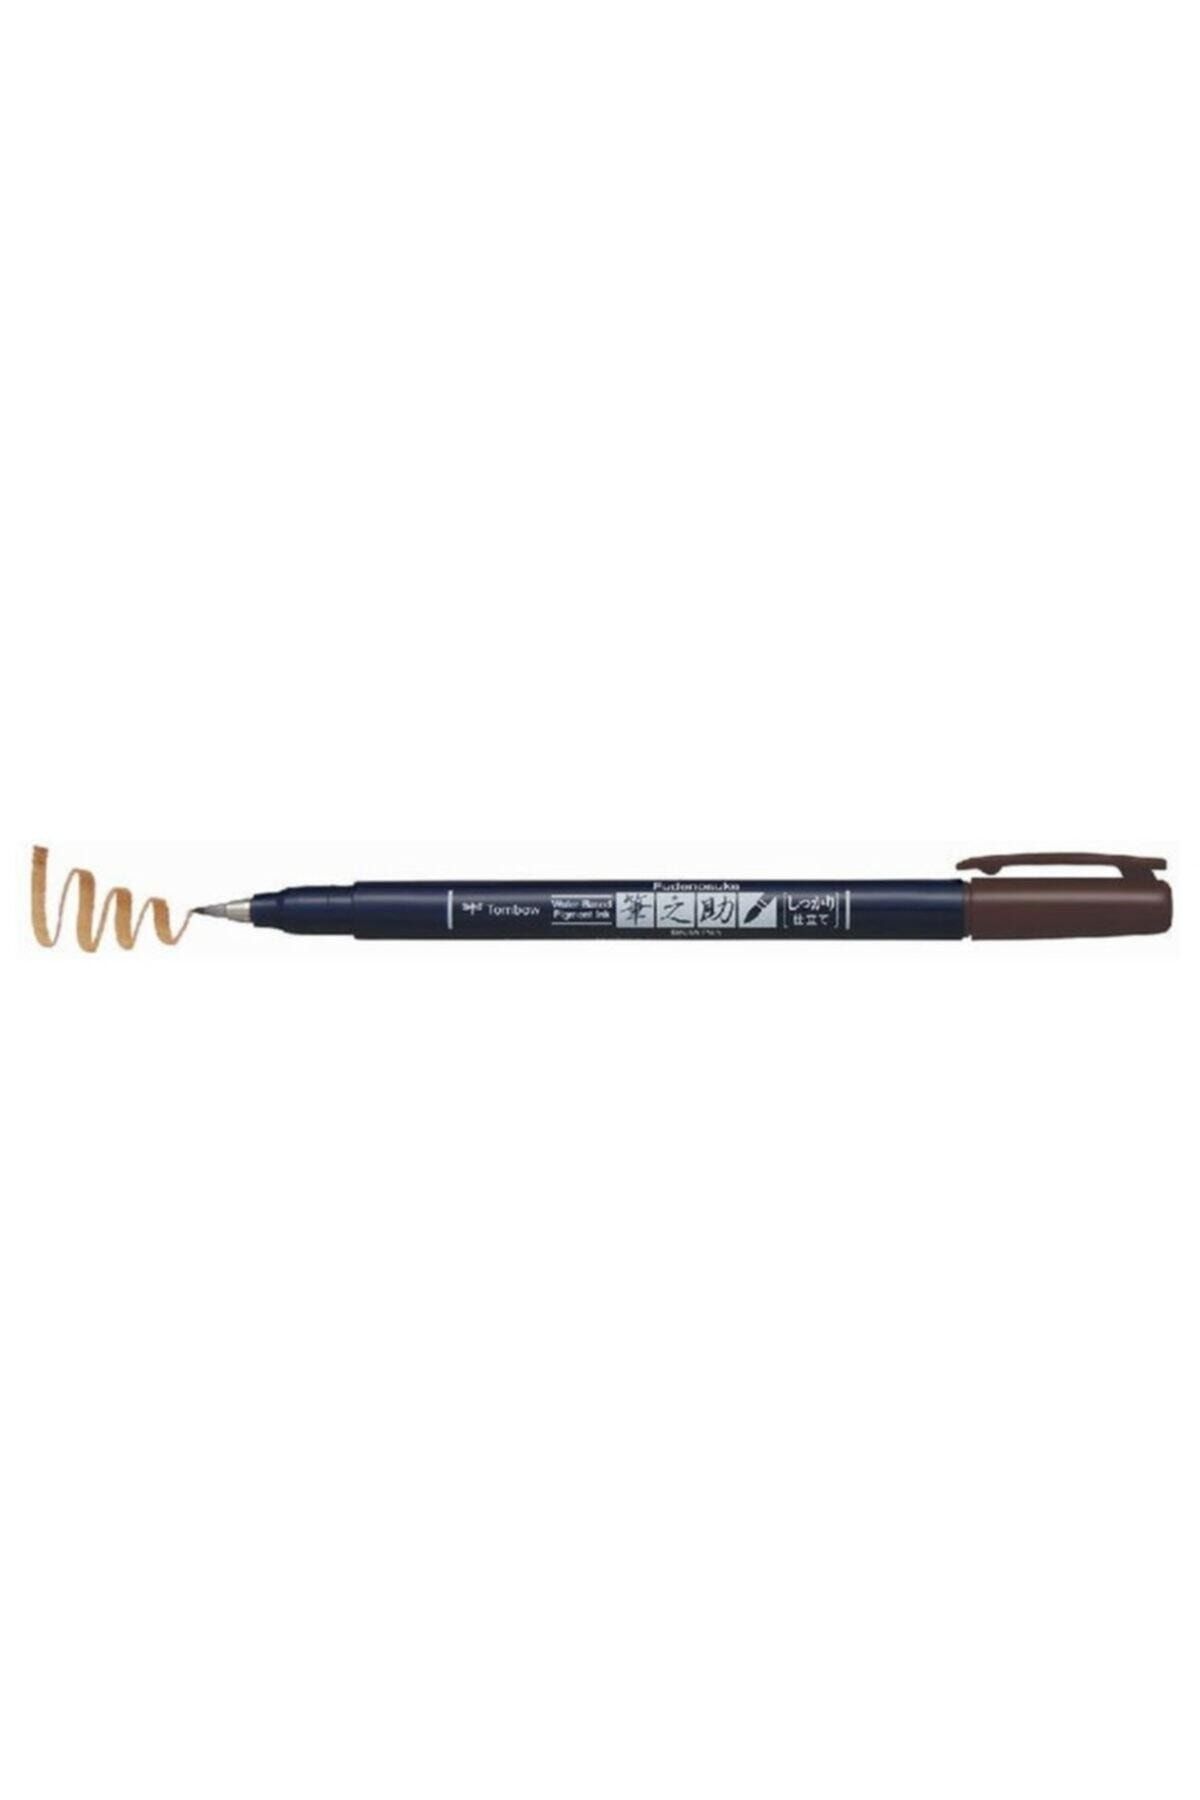 Tombow Fudenosuke Brush Pen Brown